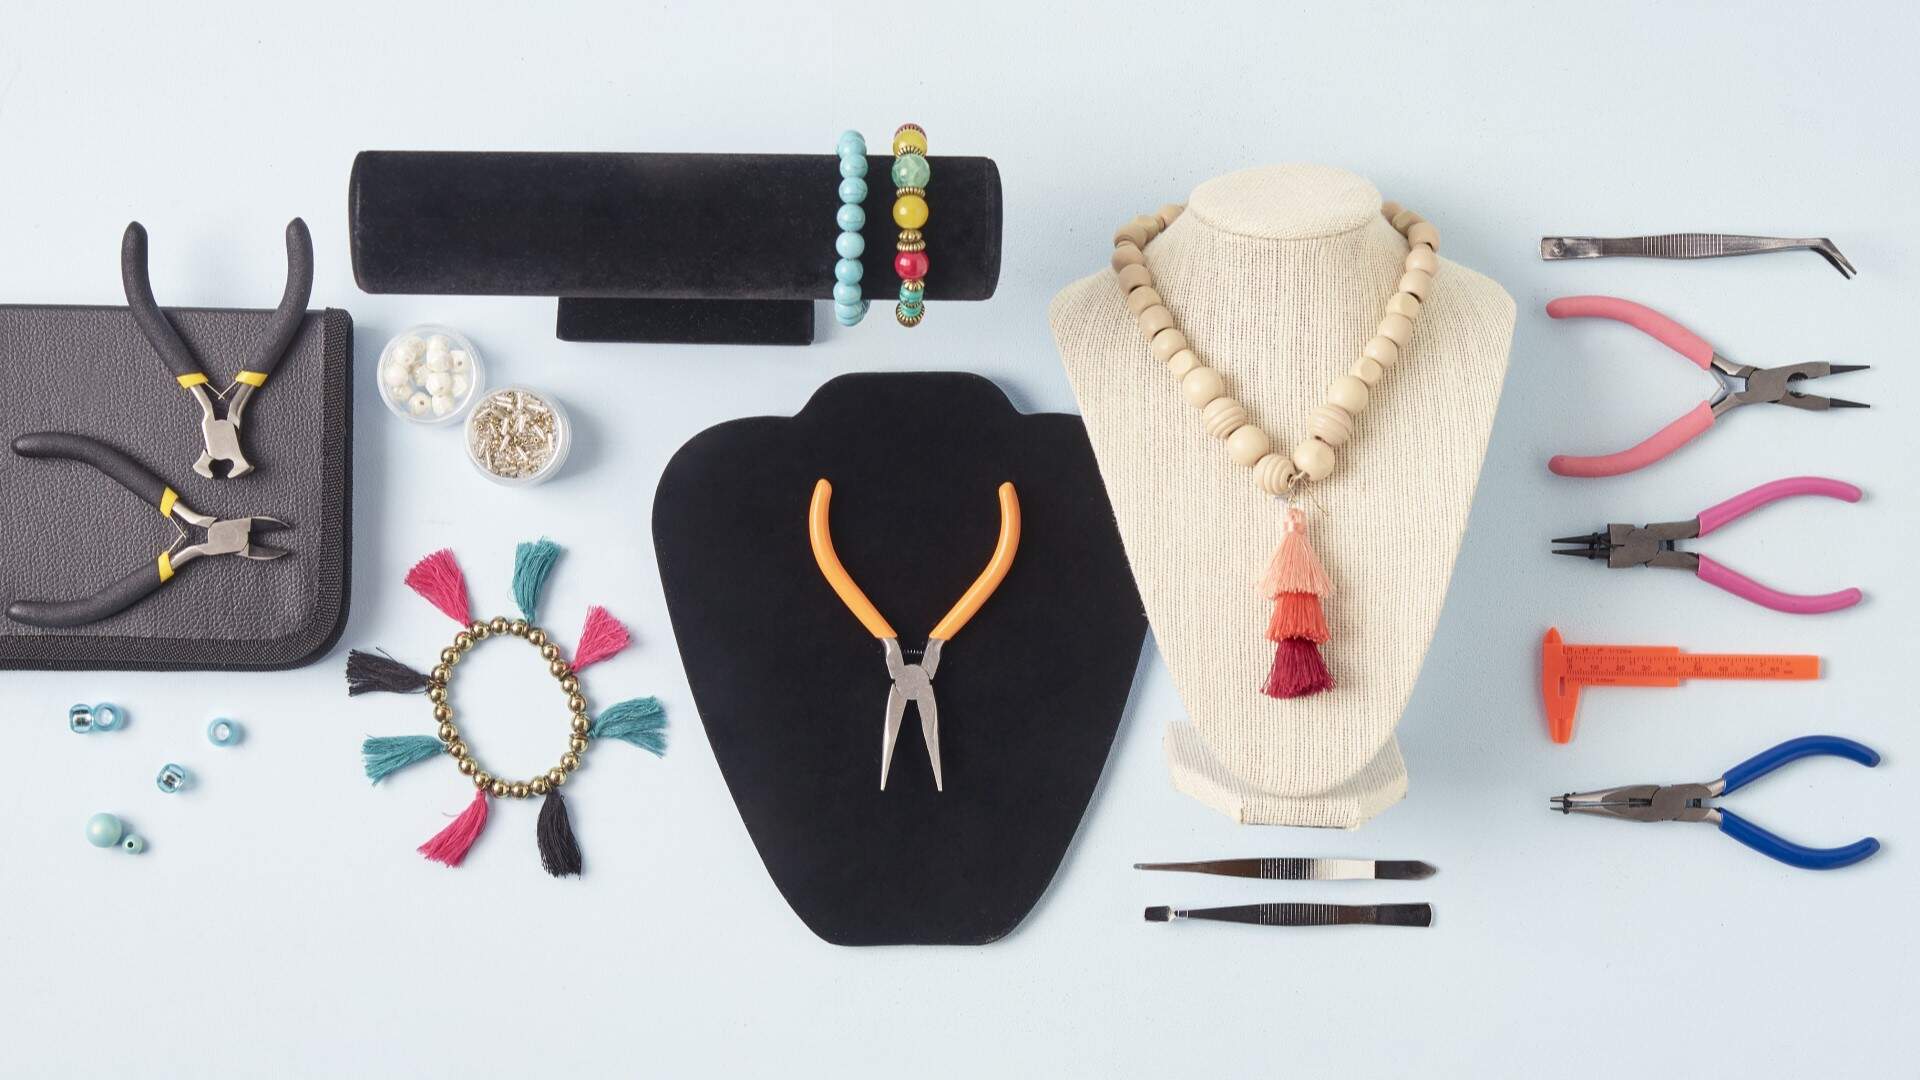 Assorted jewellery plier tools, tweezers, beads and ruler